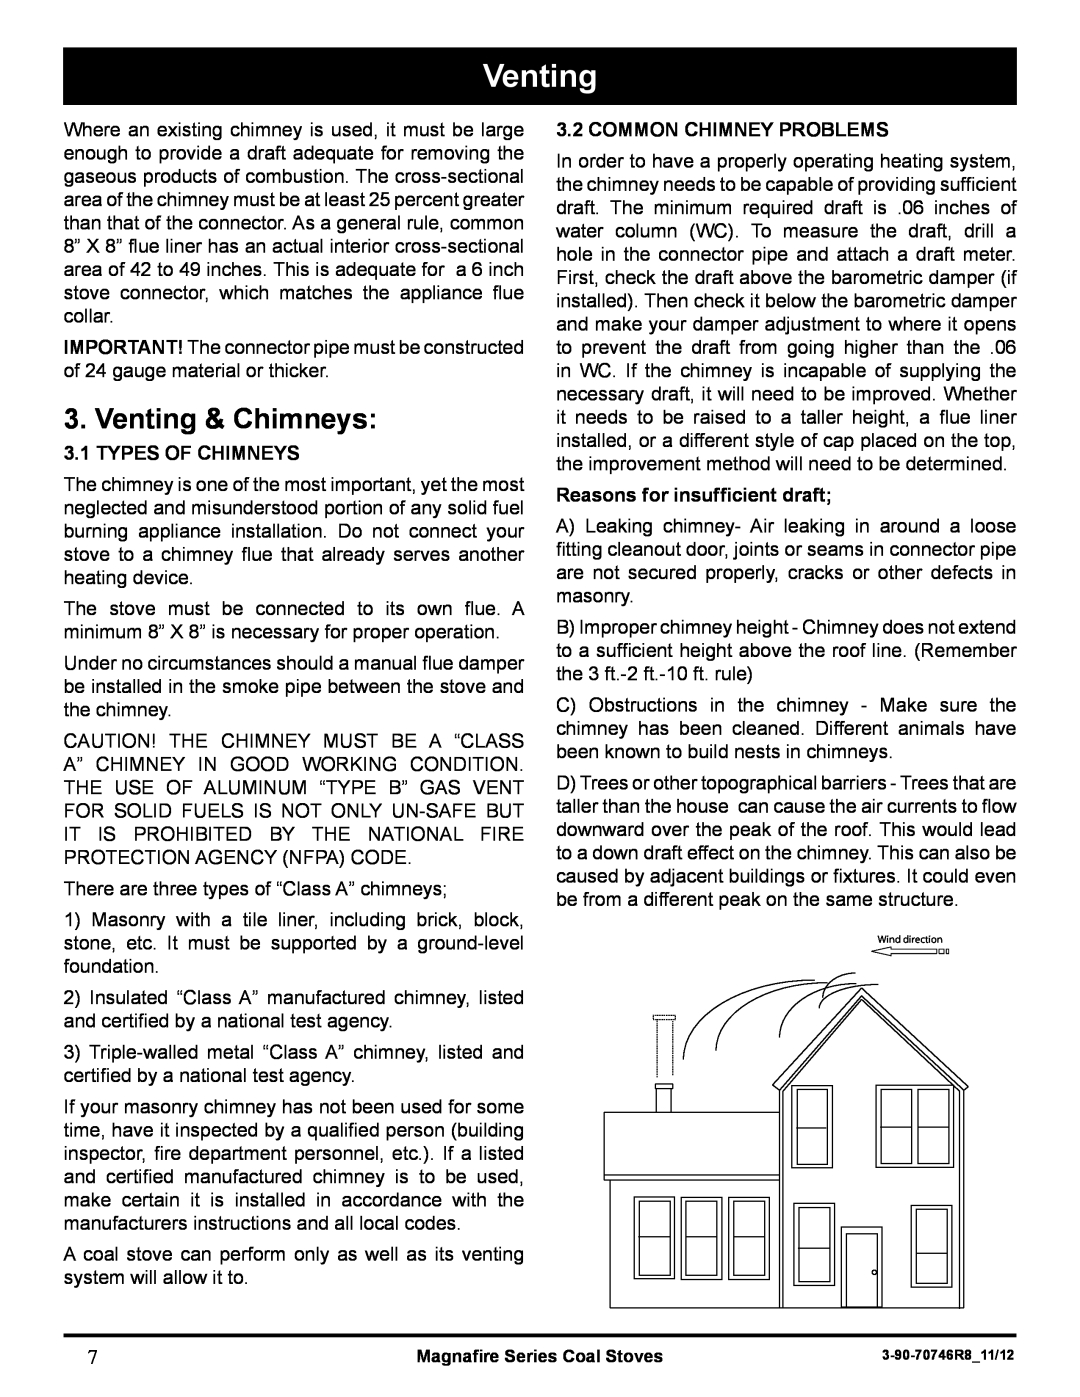 Harman Stove Company MARK III manual Venting & Chimneys, Types Of Chimneys, common chimney problems 